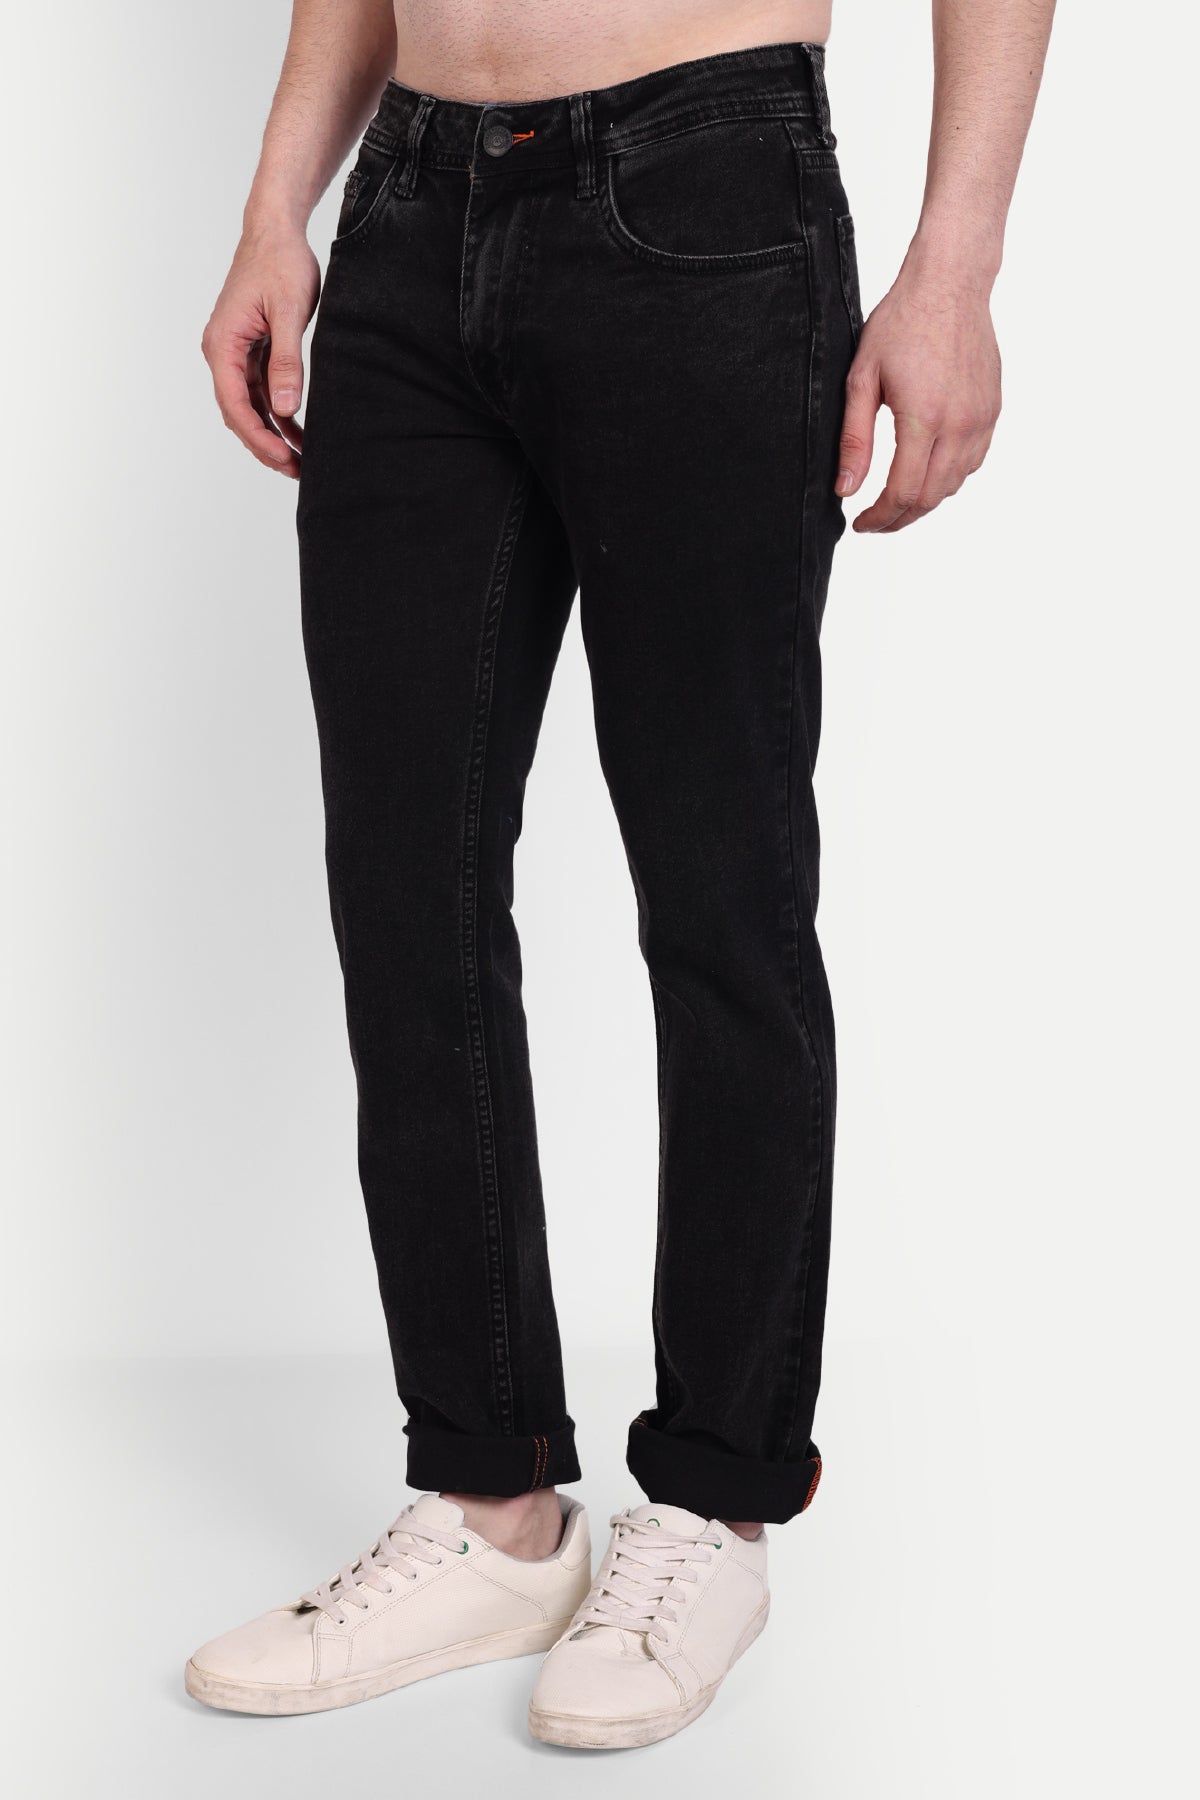 Men's Black Slim Fit Jeans